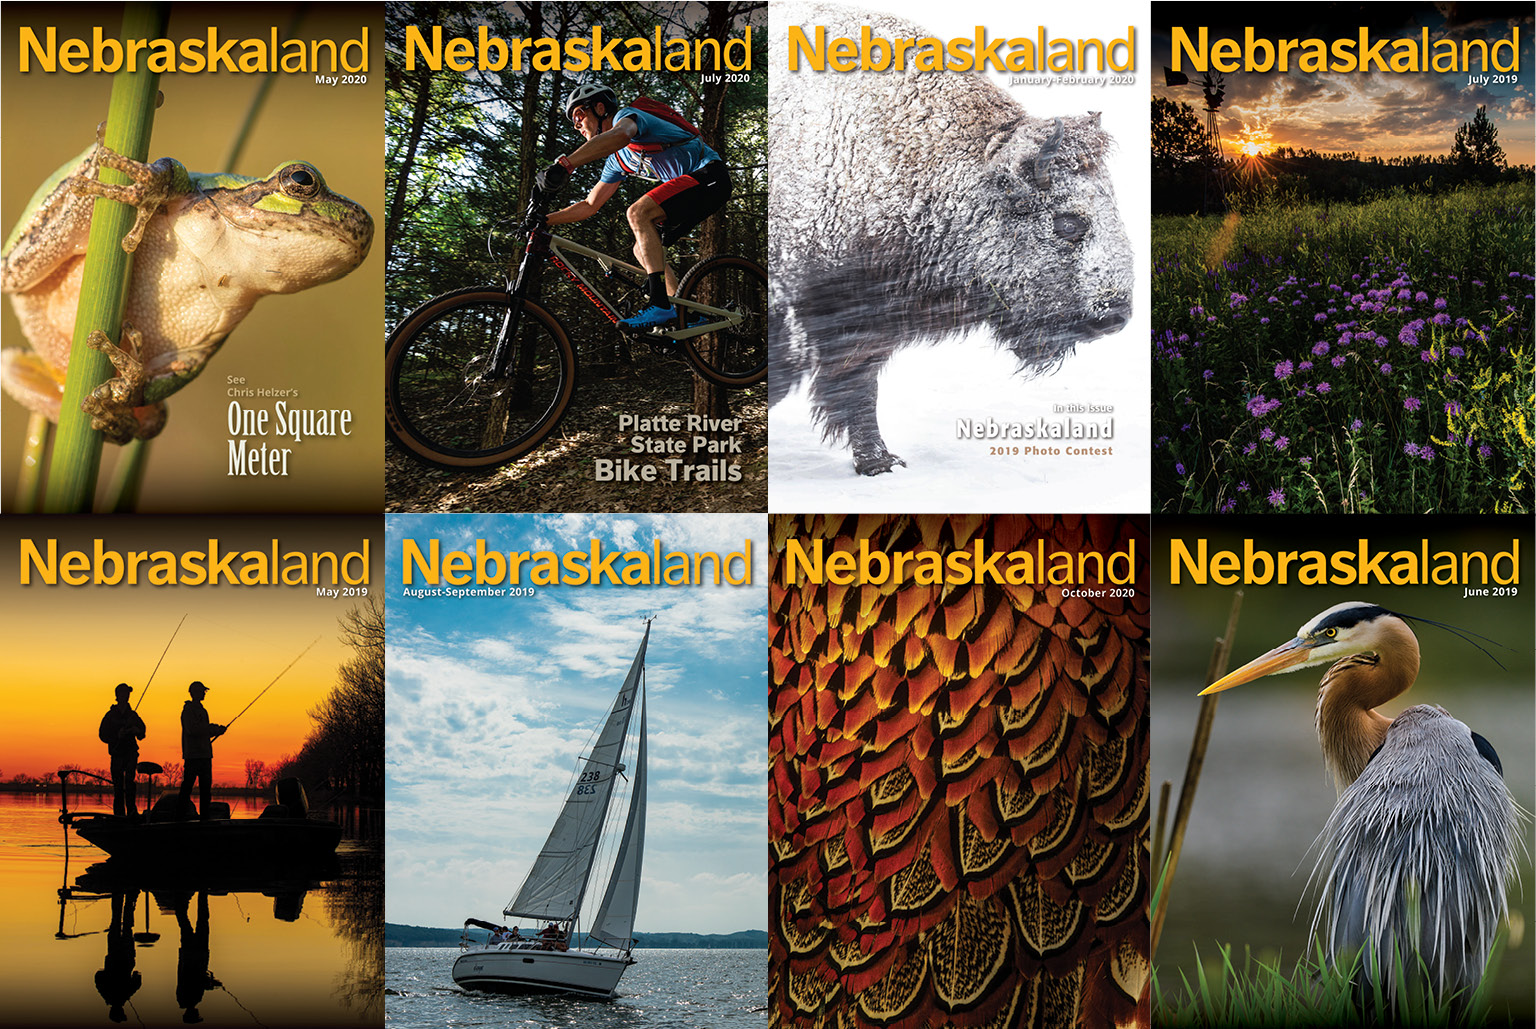 Nebraskaland Magazine covers.